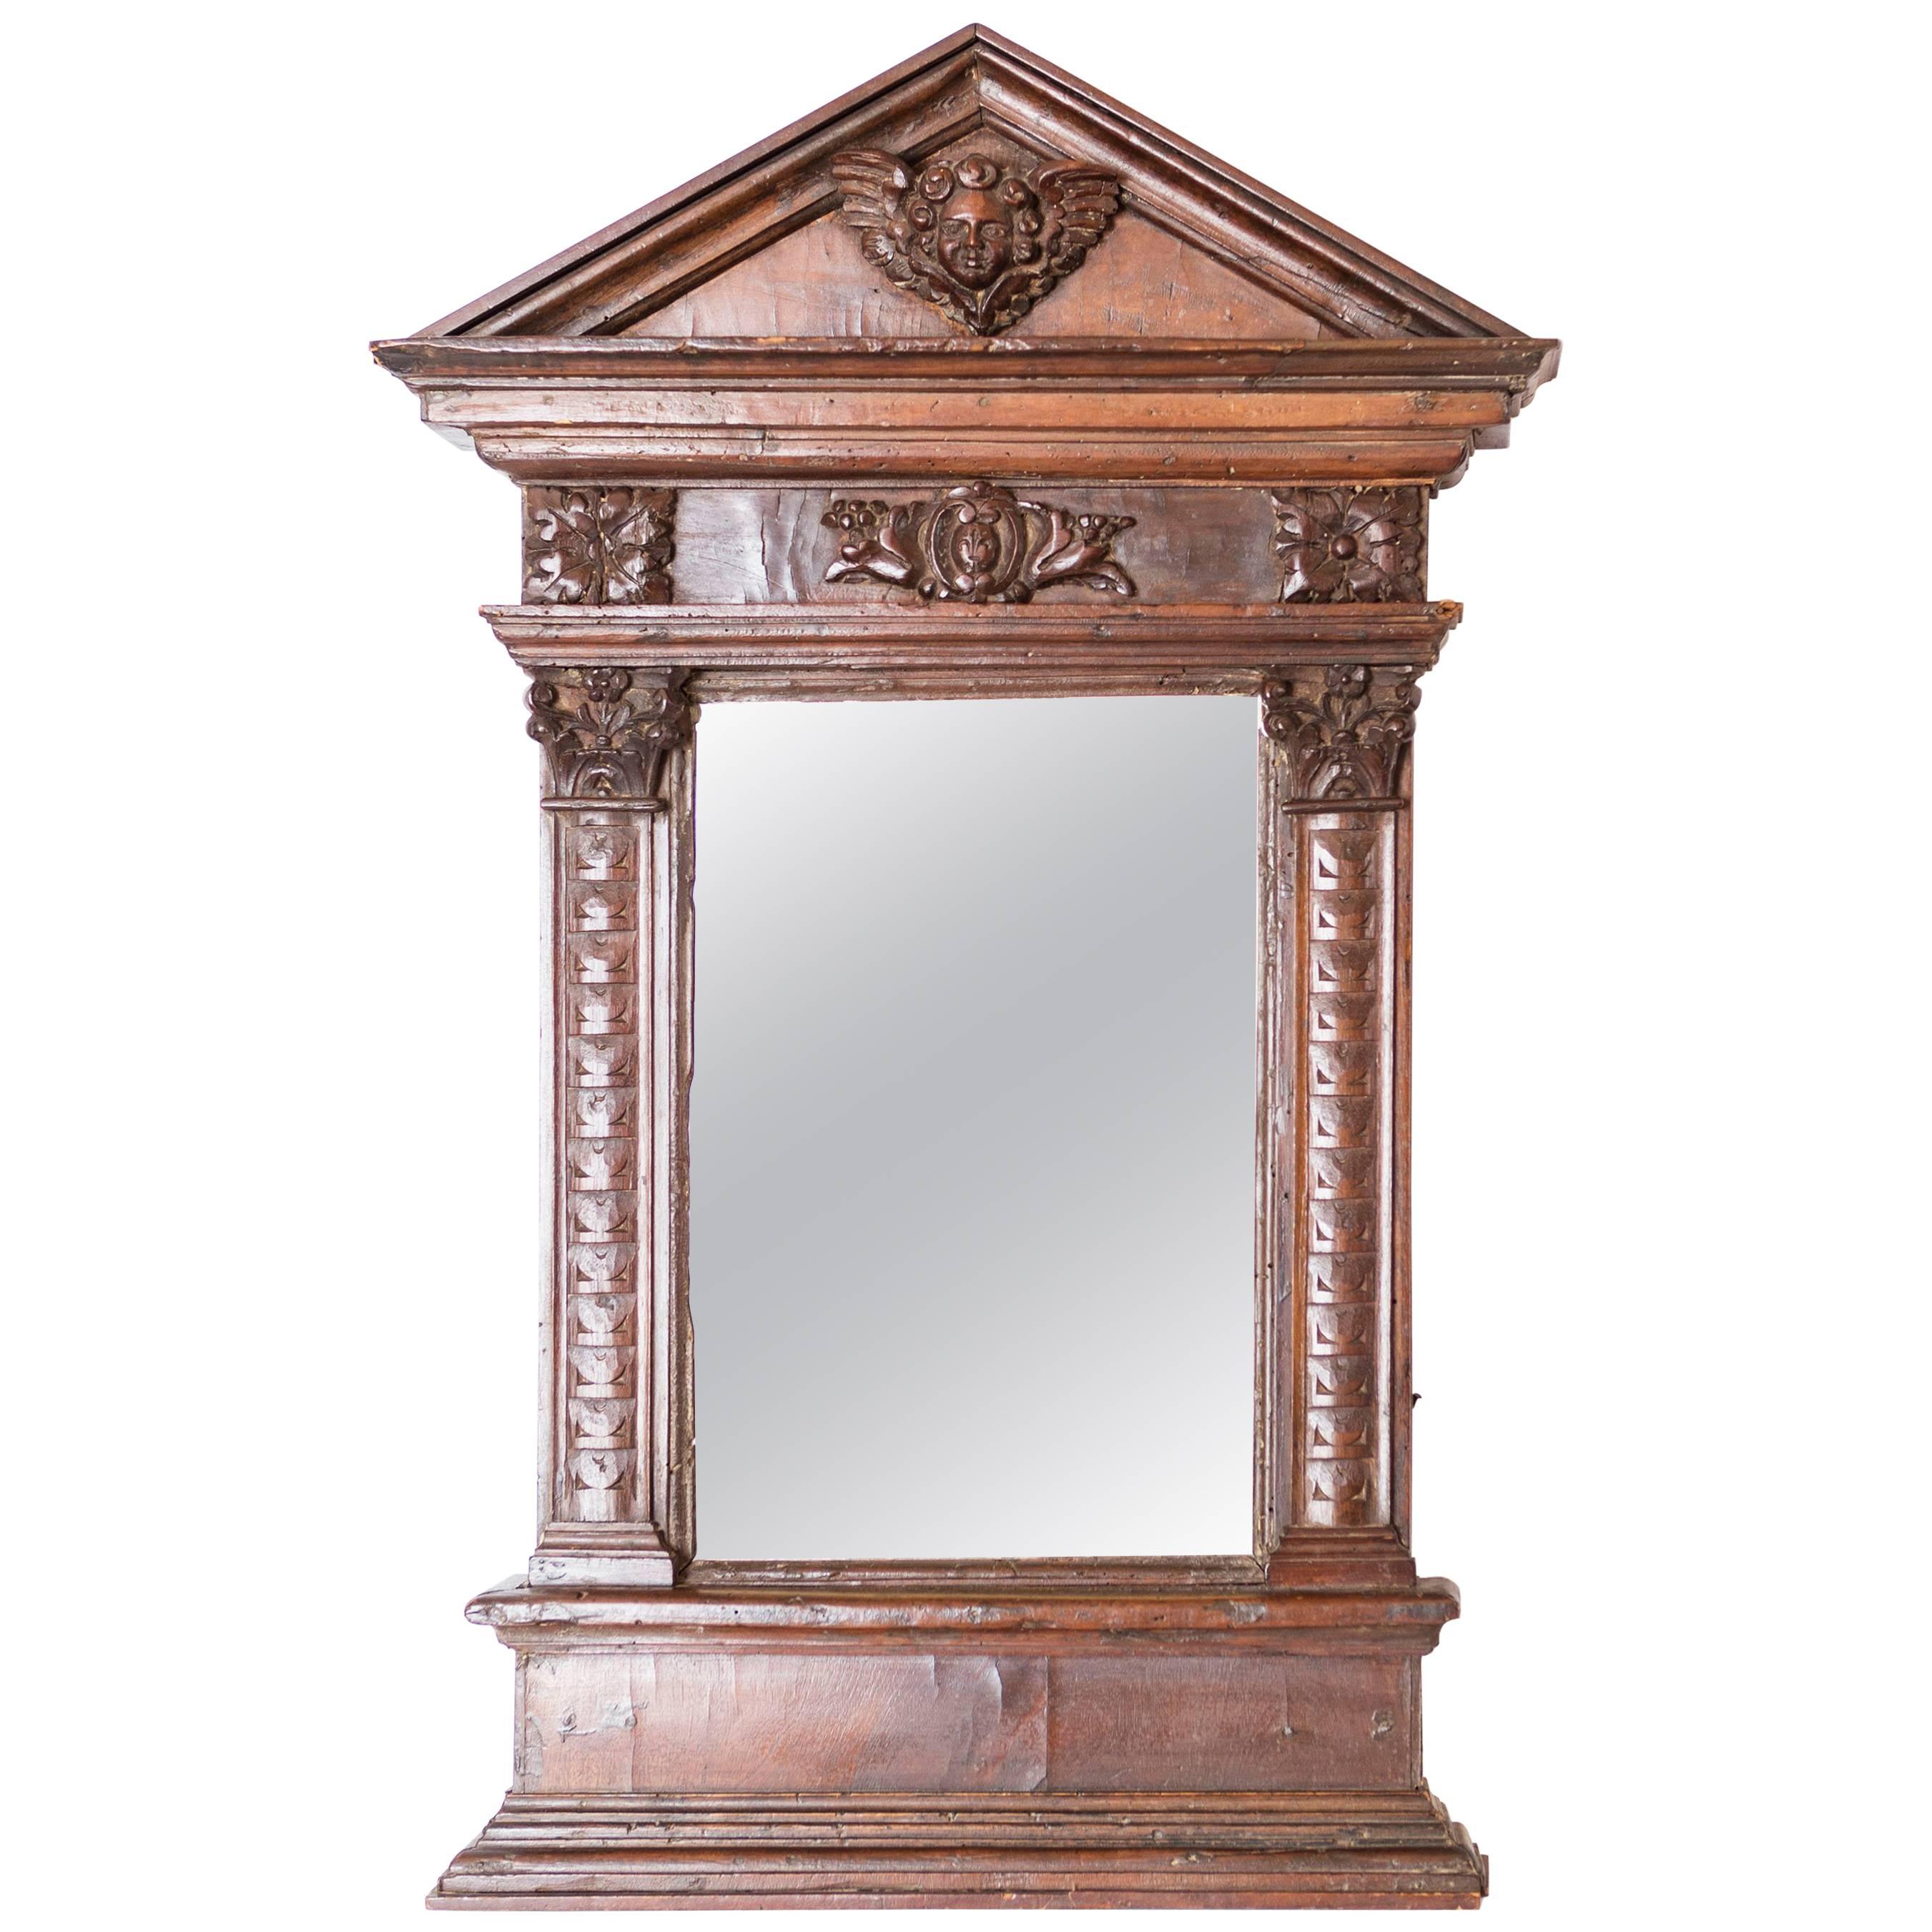 18th Century Italian Wood Mirror with Pediment and Cherub Detail